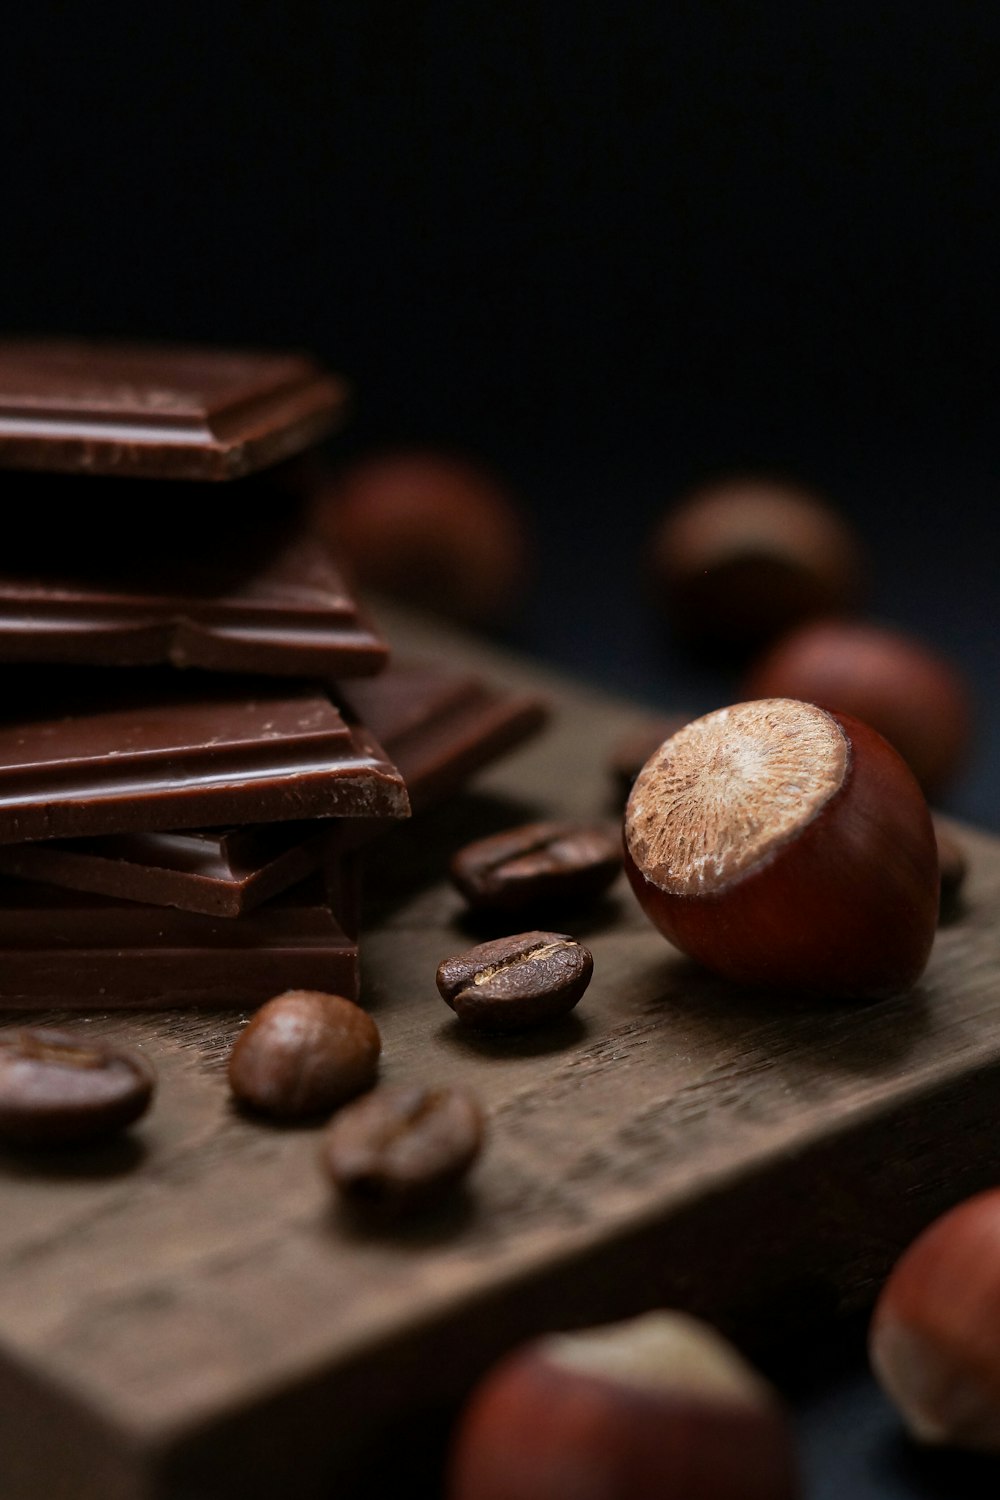 cocoa near chocolate